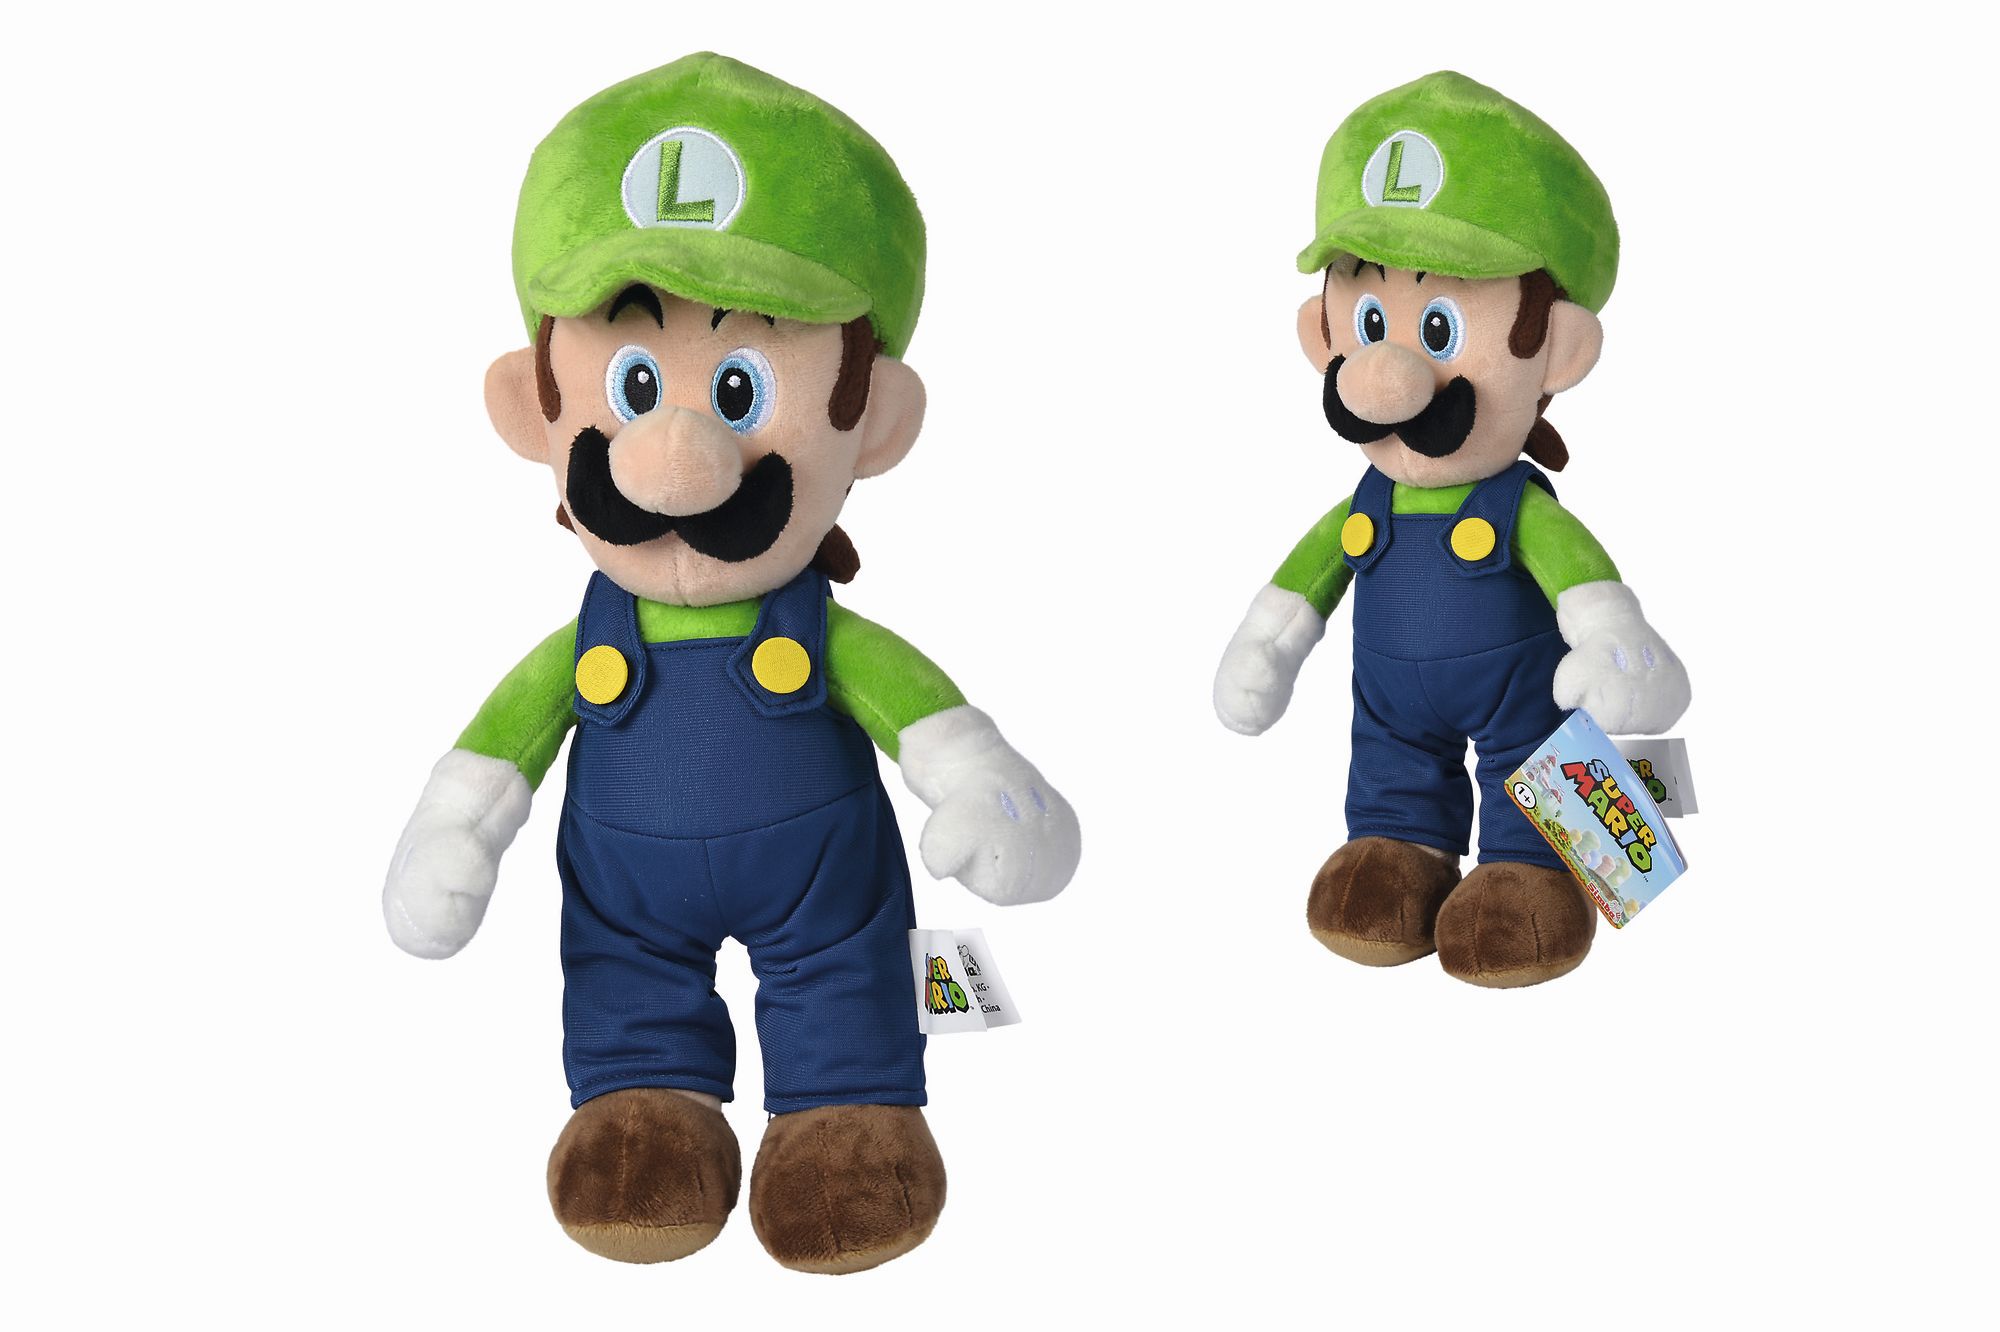 Plyšová figúrka Super Mario Luigi, 30 cm